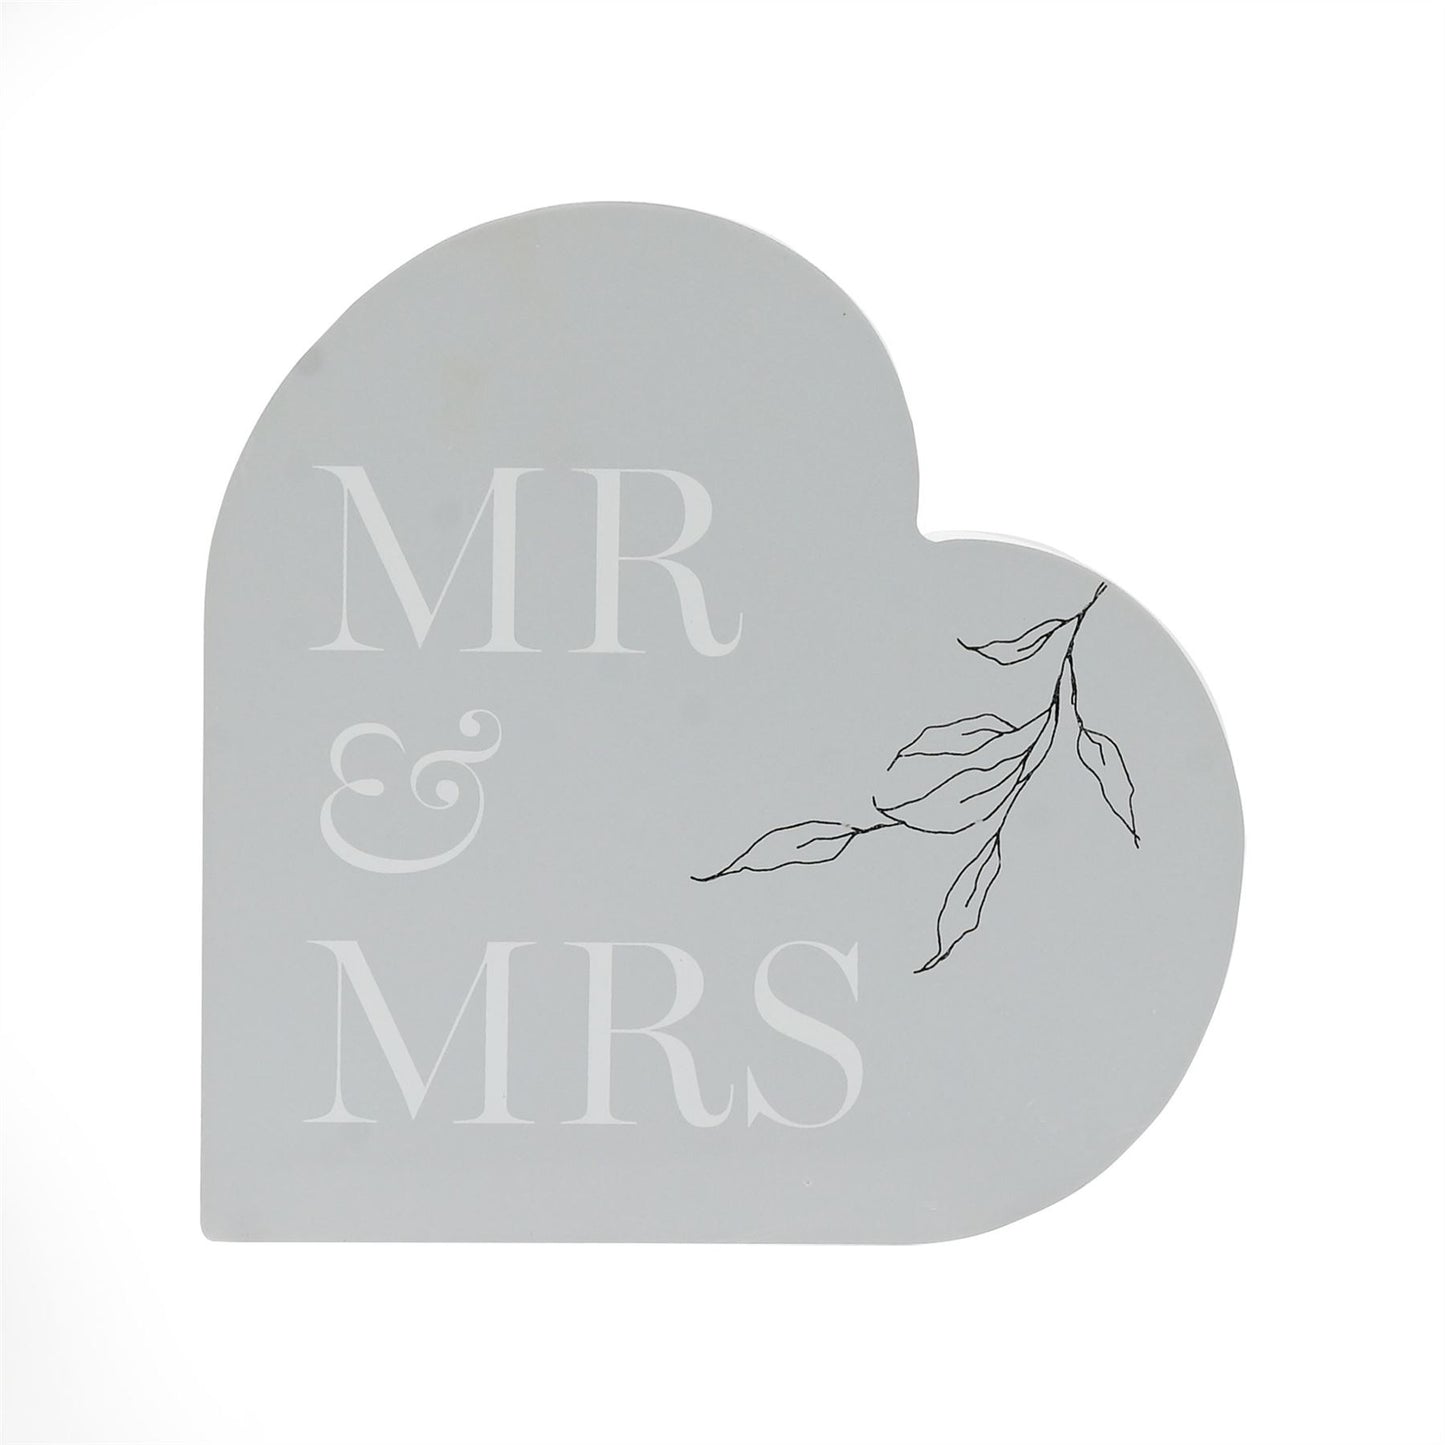 Amore Heart Mantel Plaque Mr & Mrs